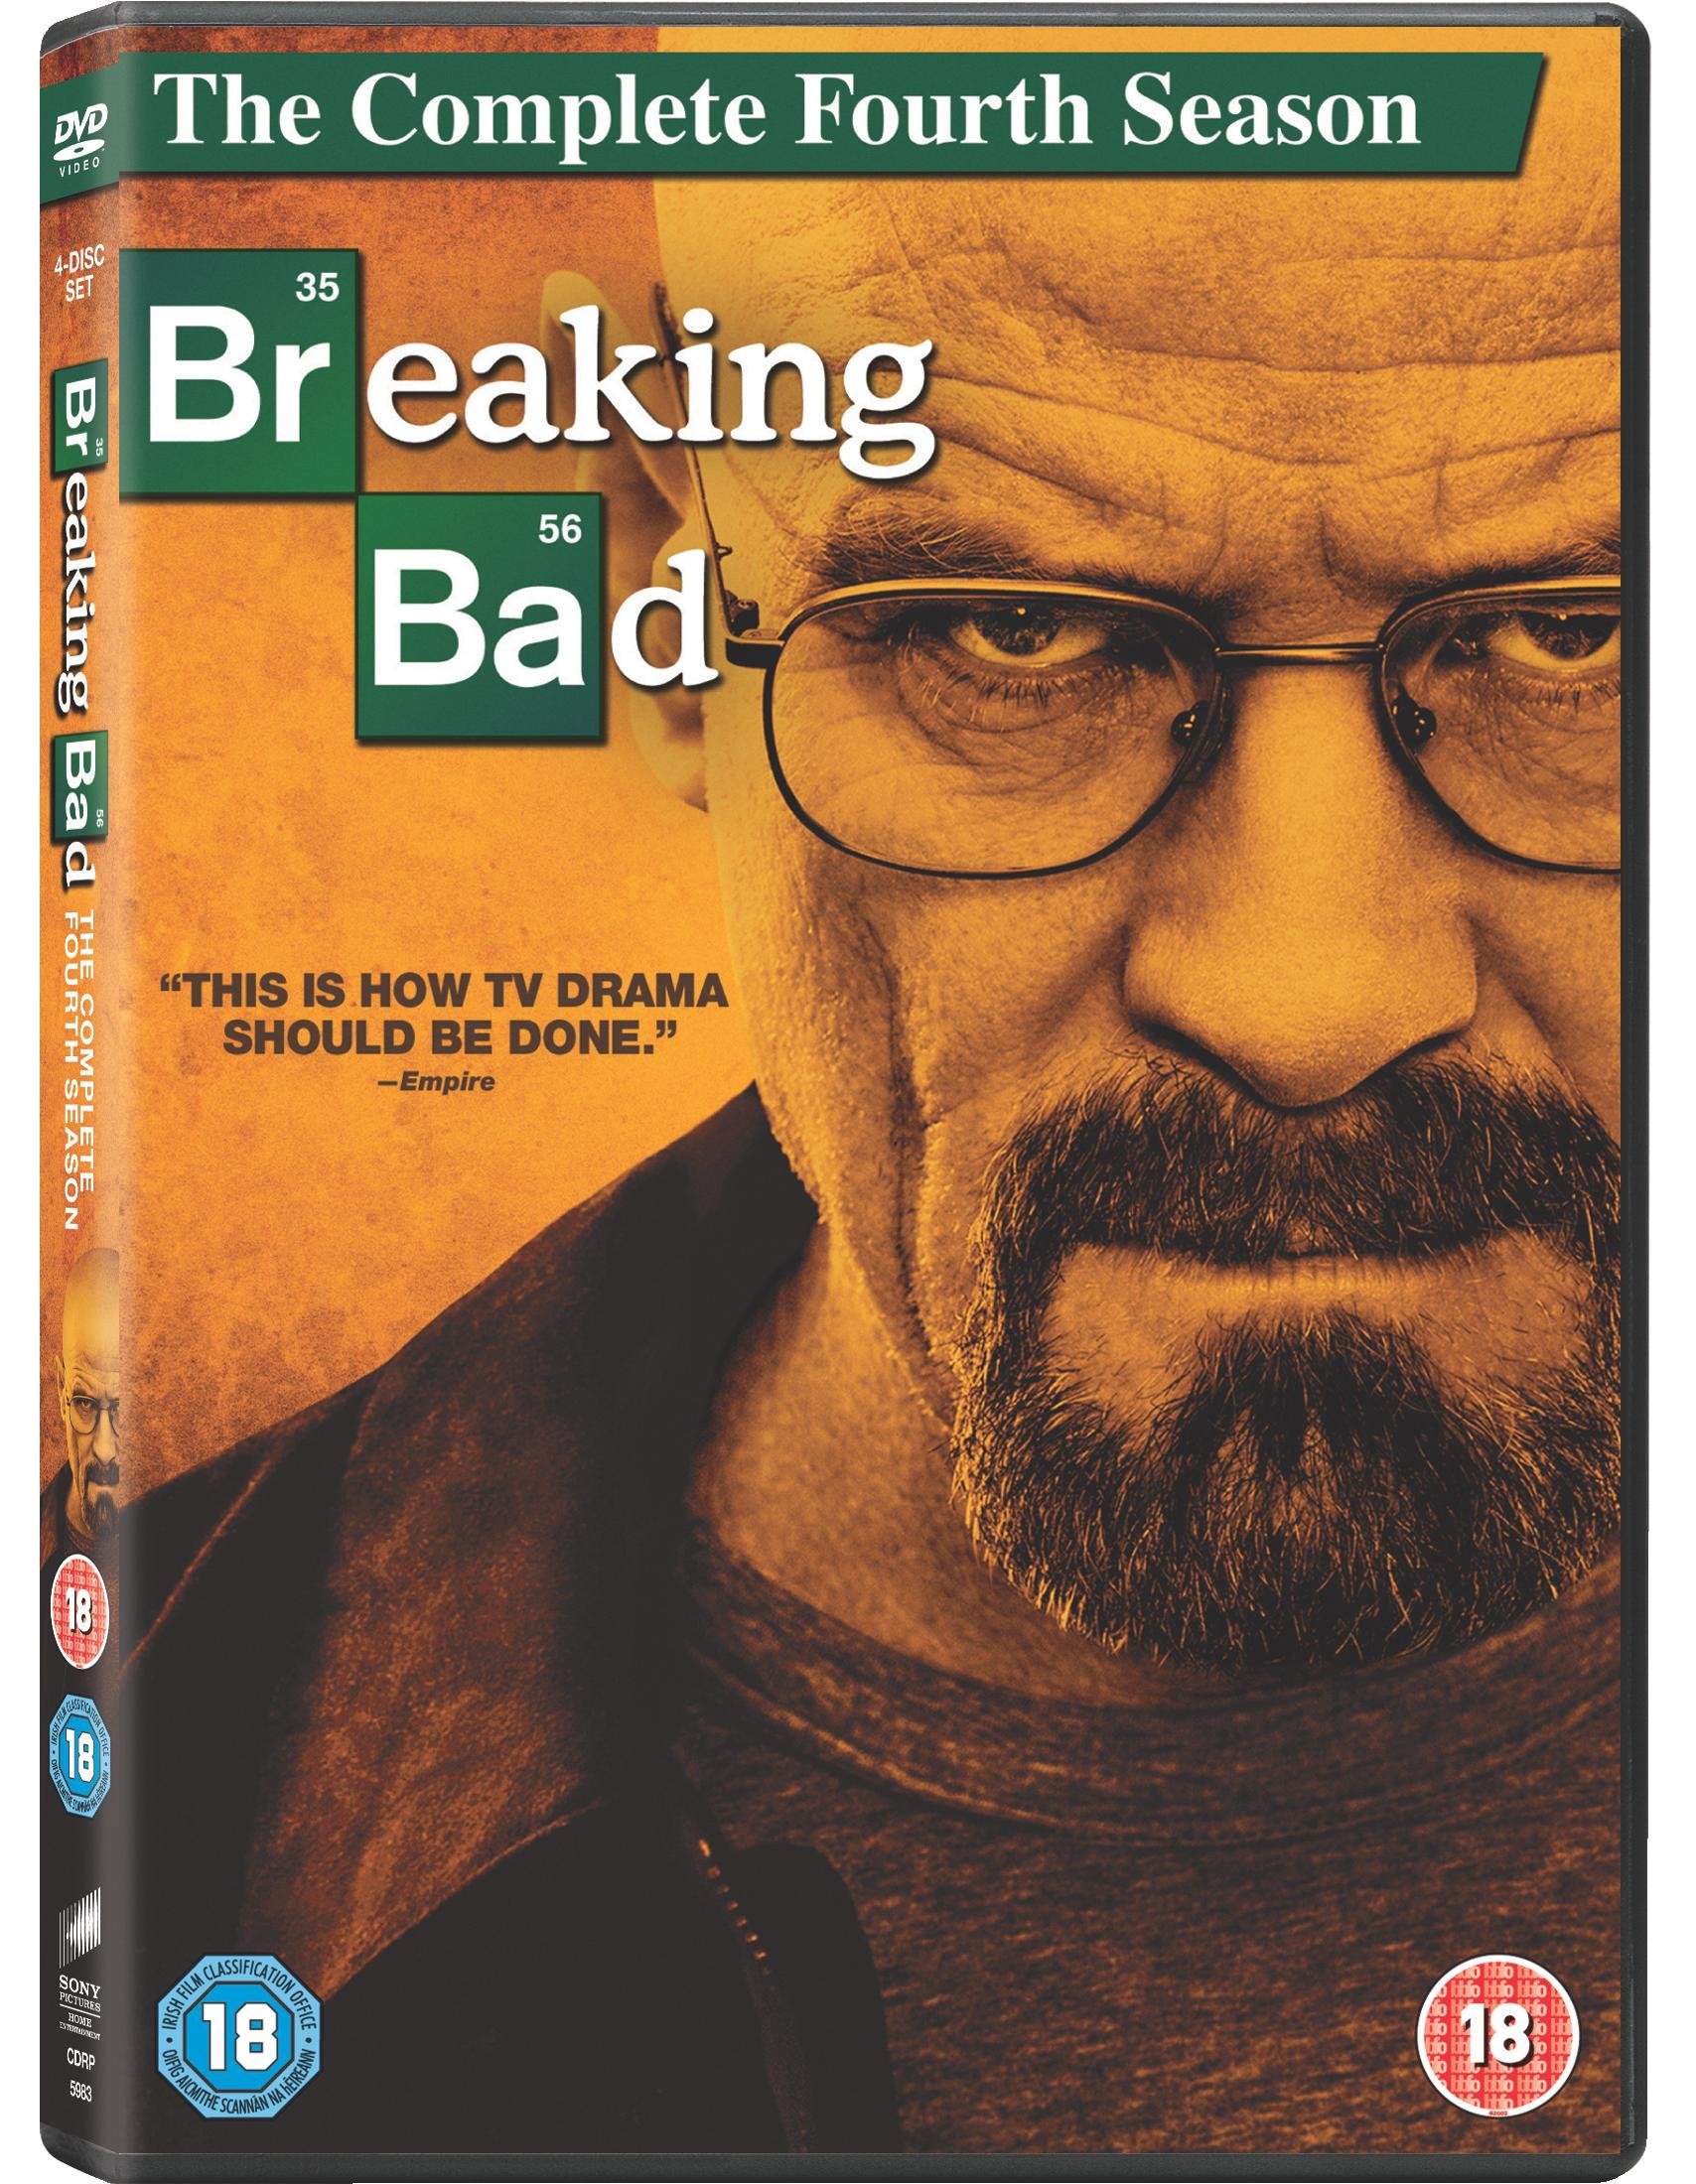 Aaron Paul Breaking Bad Emmy Images | TheCelebrityPix